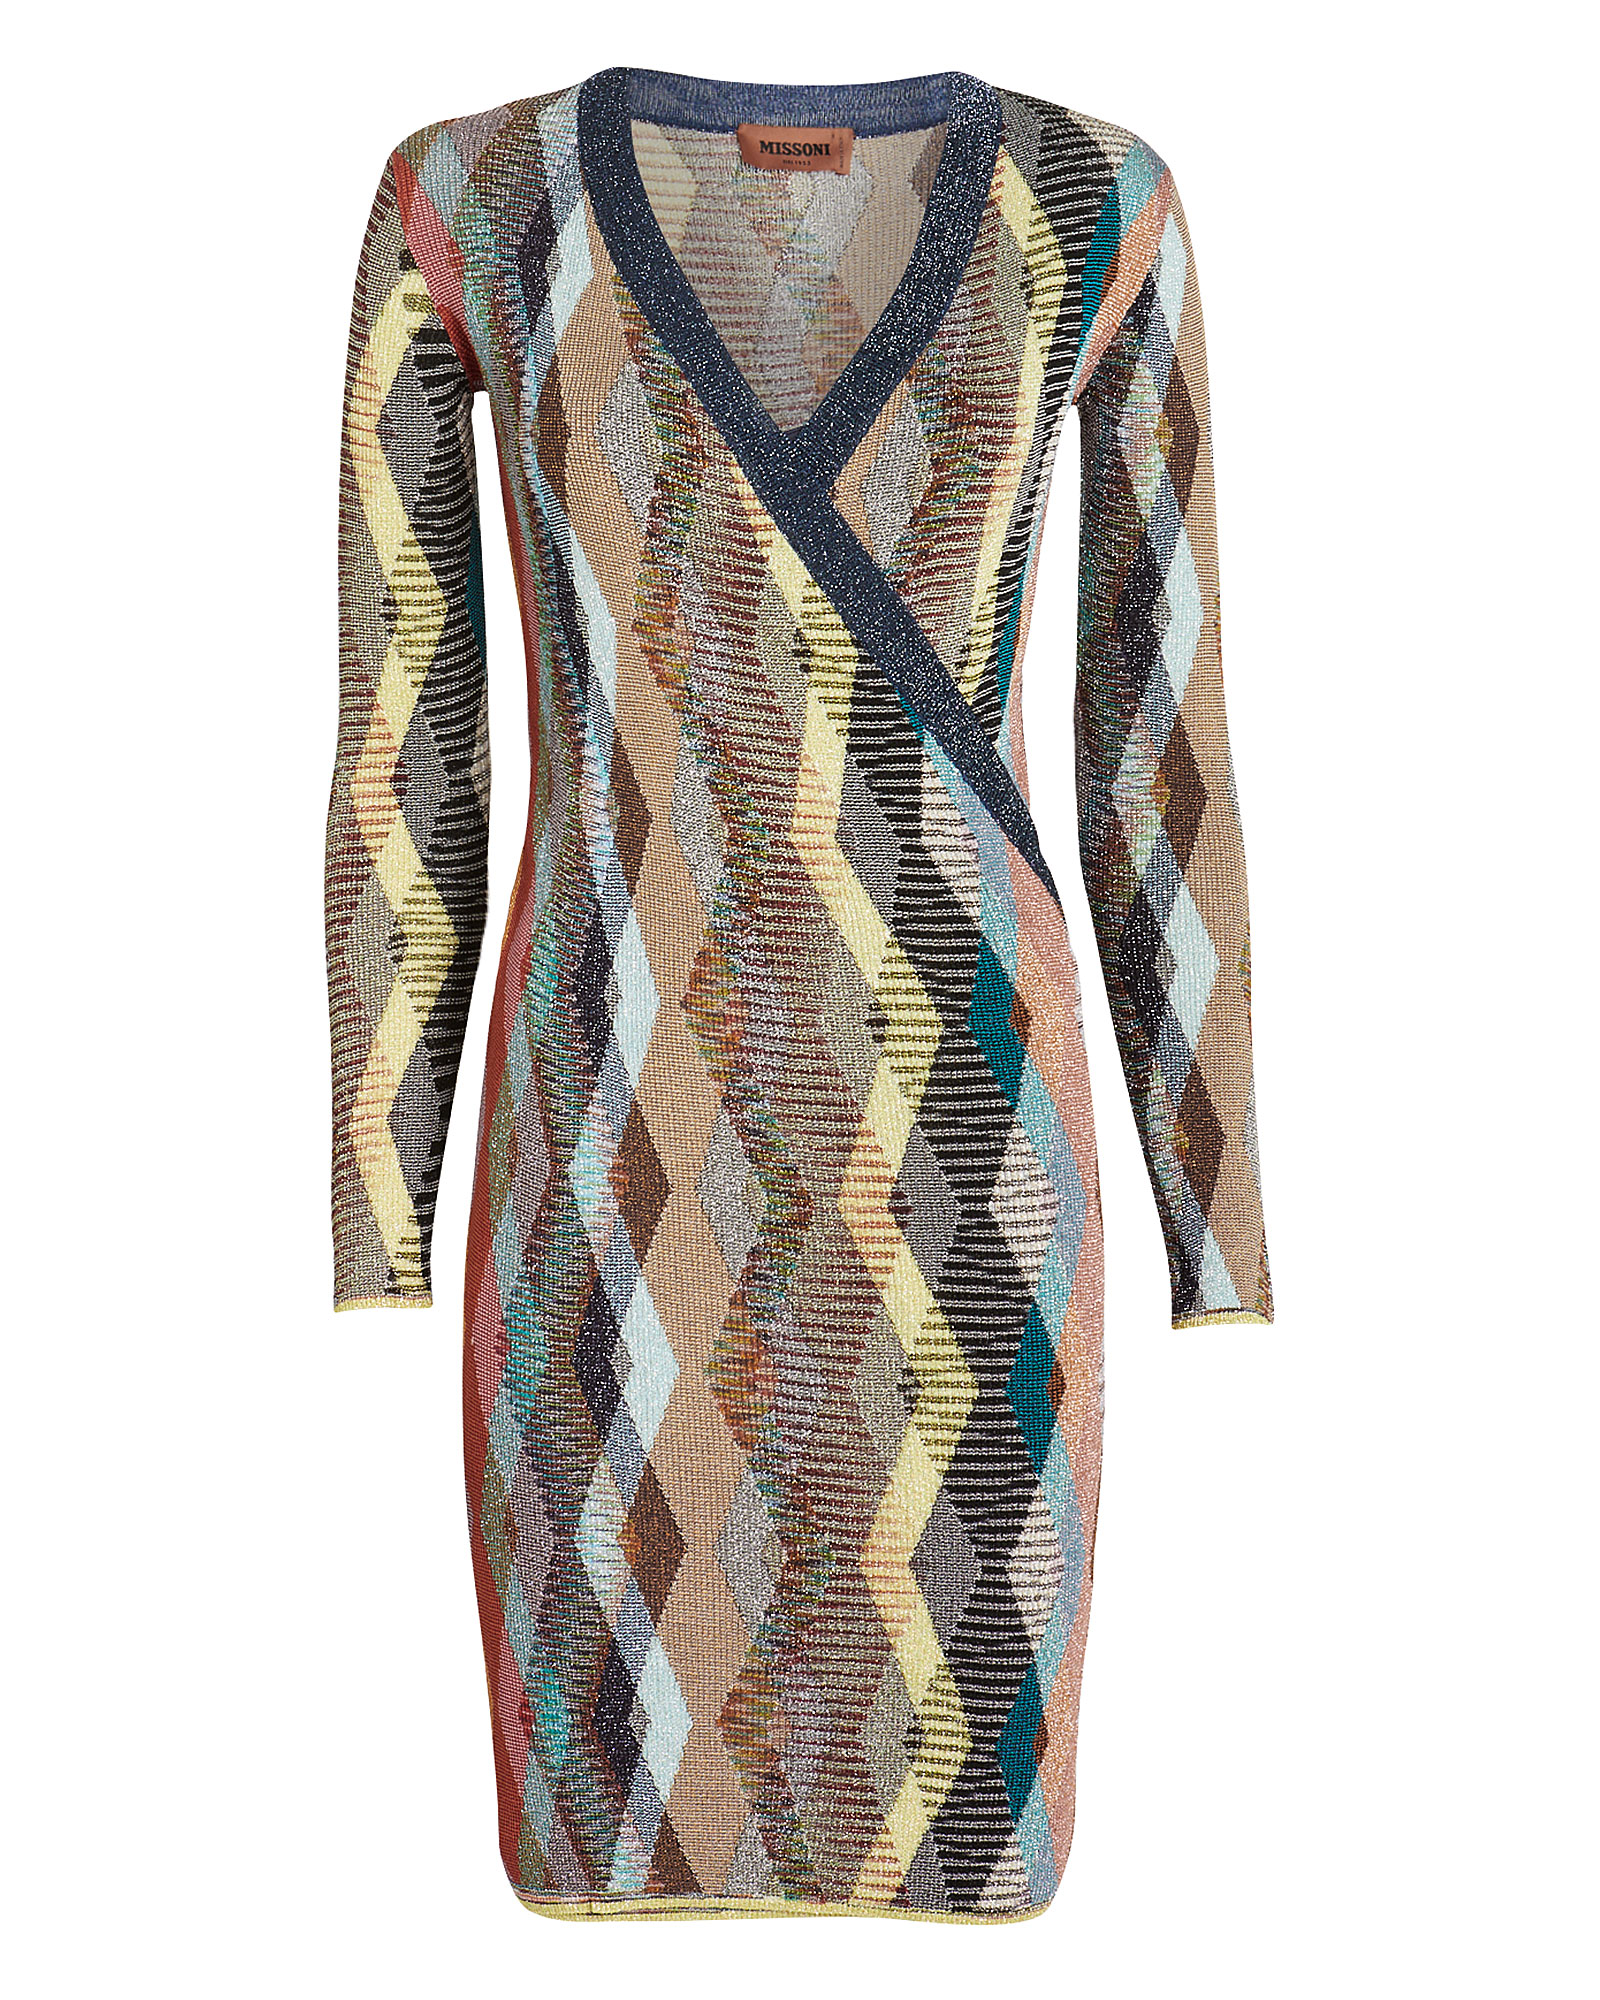 Missoni | Chevron Knit Wrap Dress | INTERMIX®